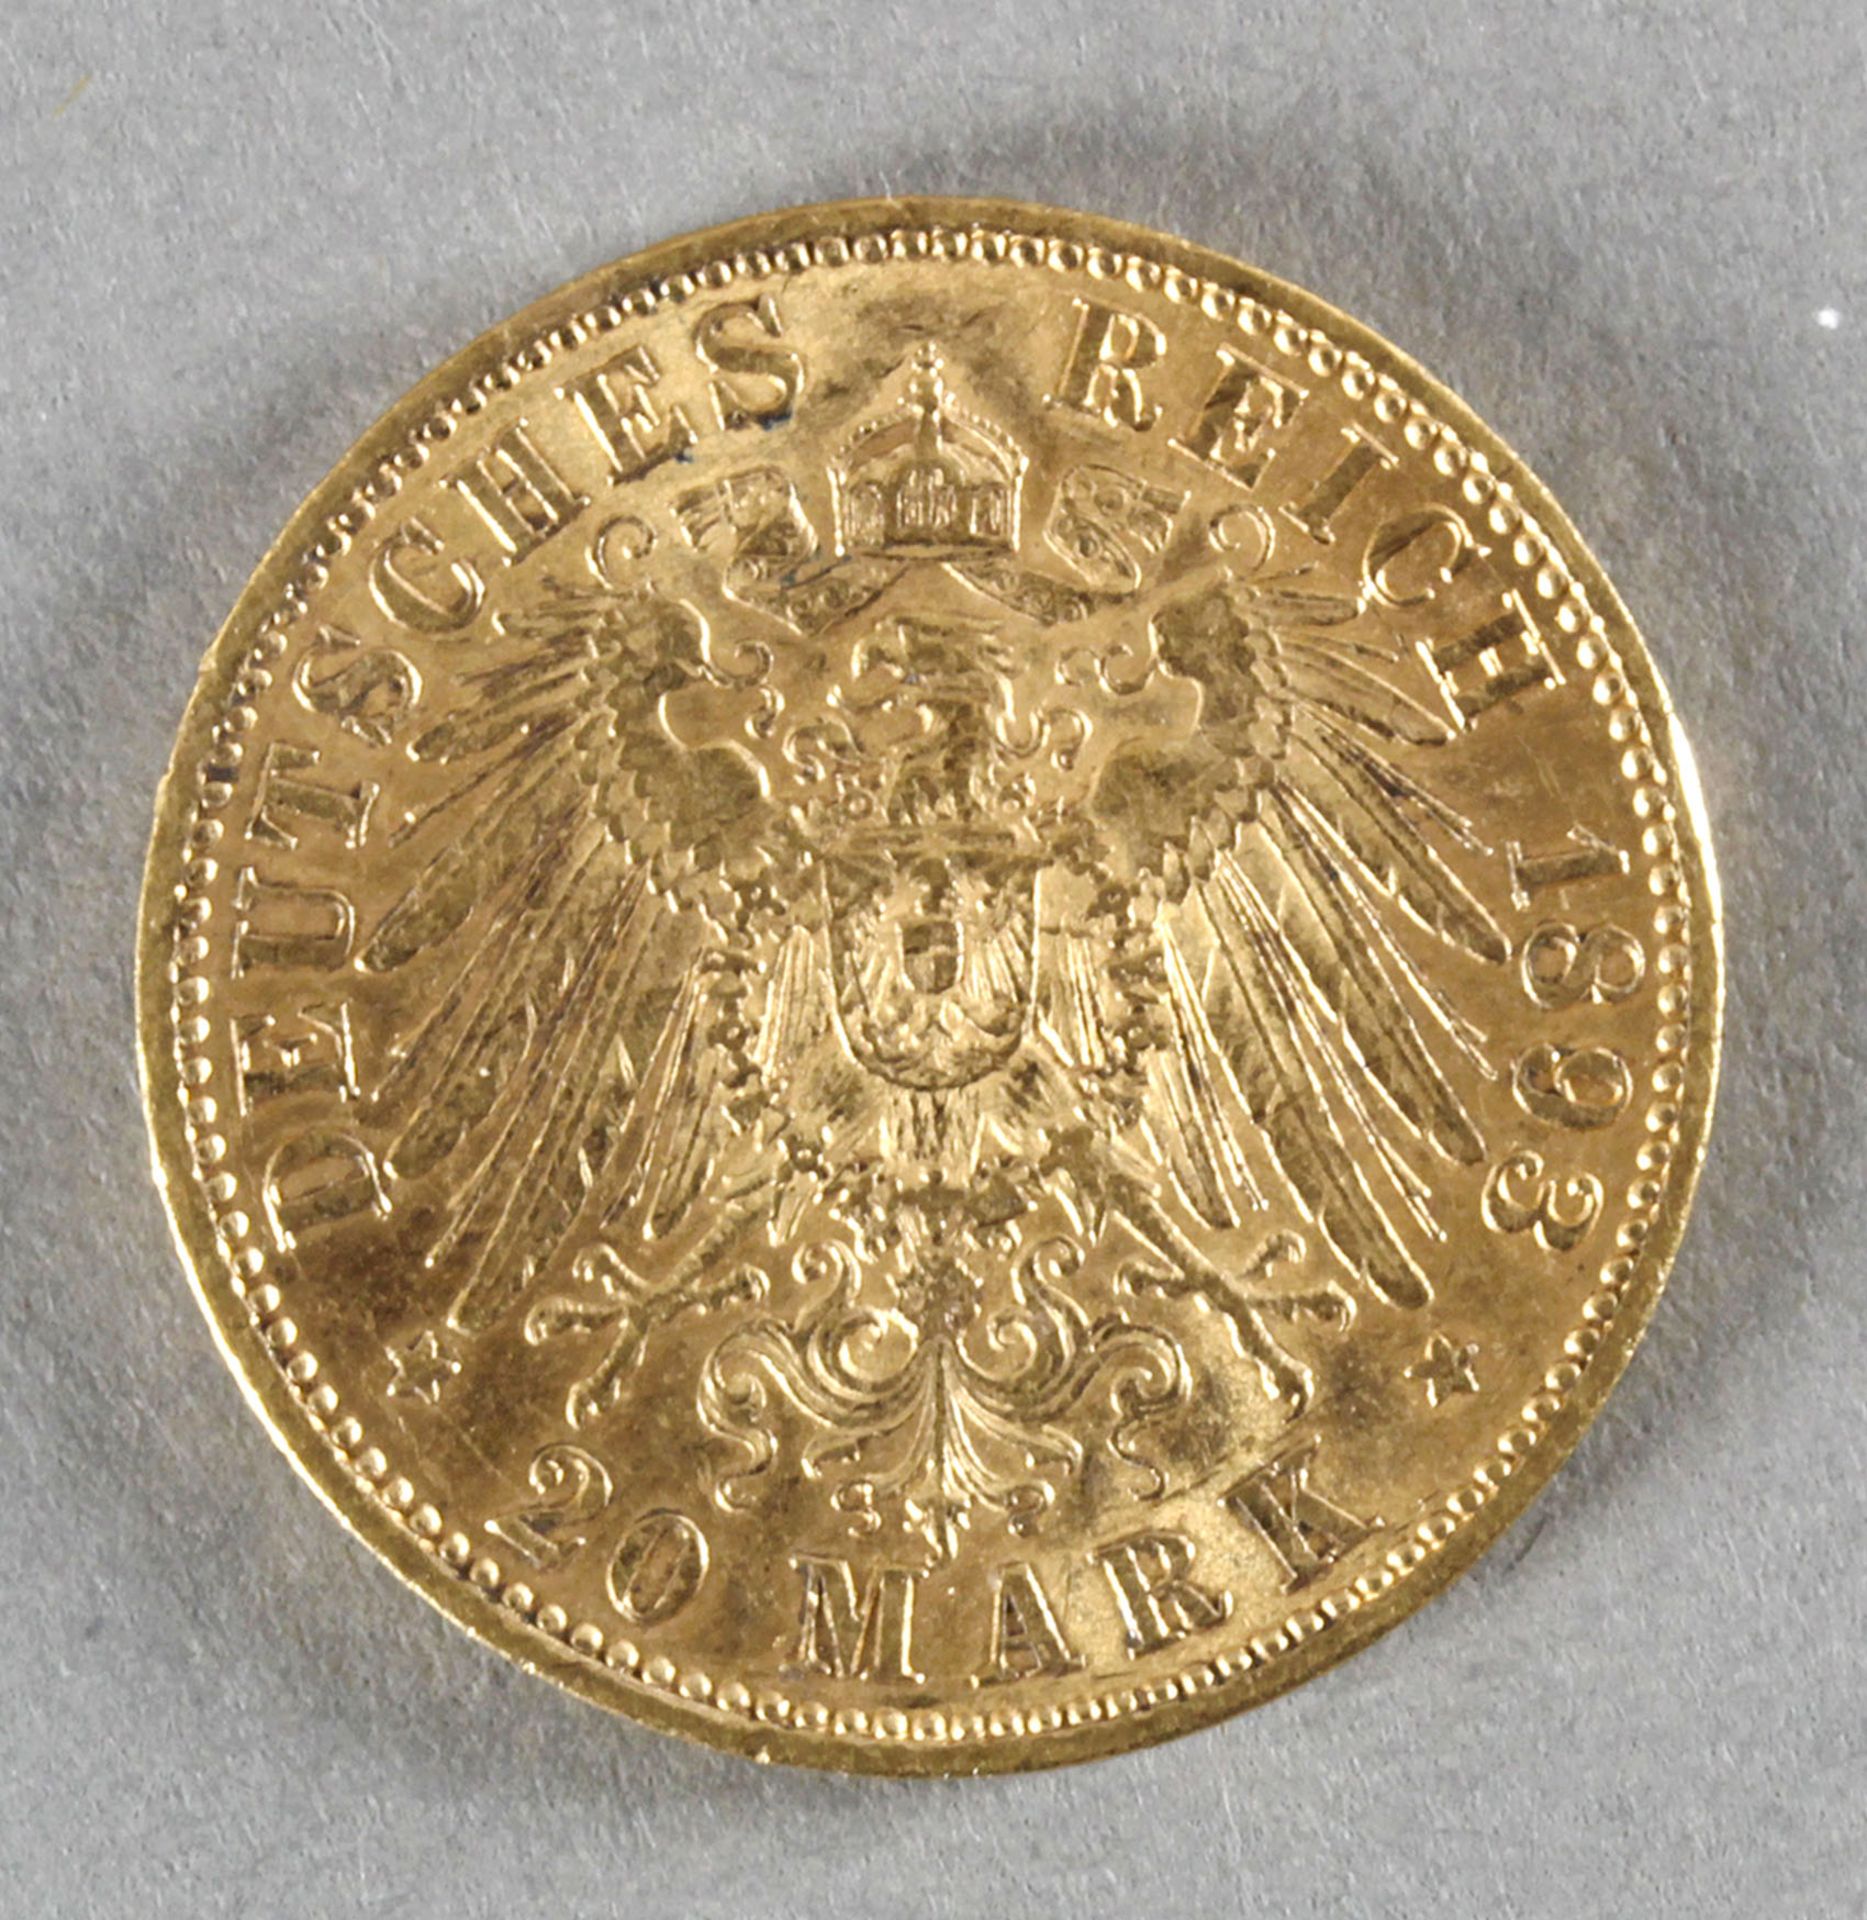 Goldmünze, 20 Mark, 1893 A, Wilhelm II. (Preußen) - Image 2 of 2